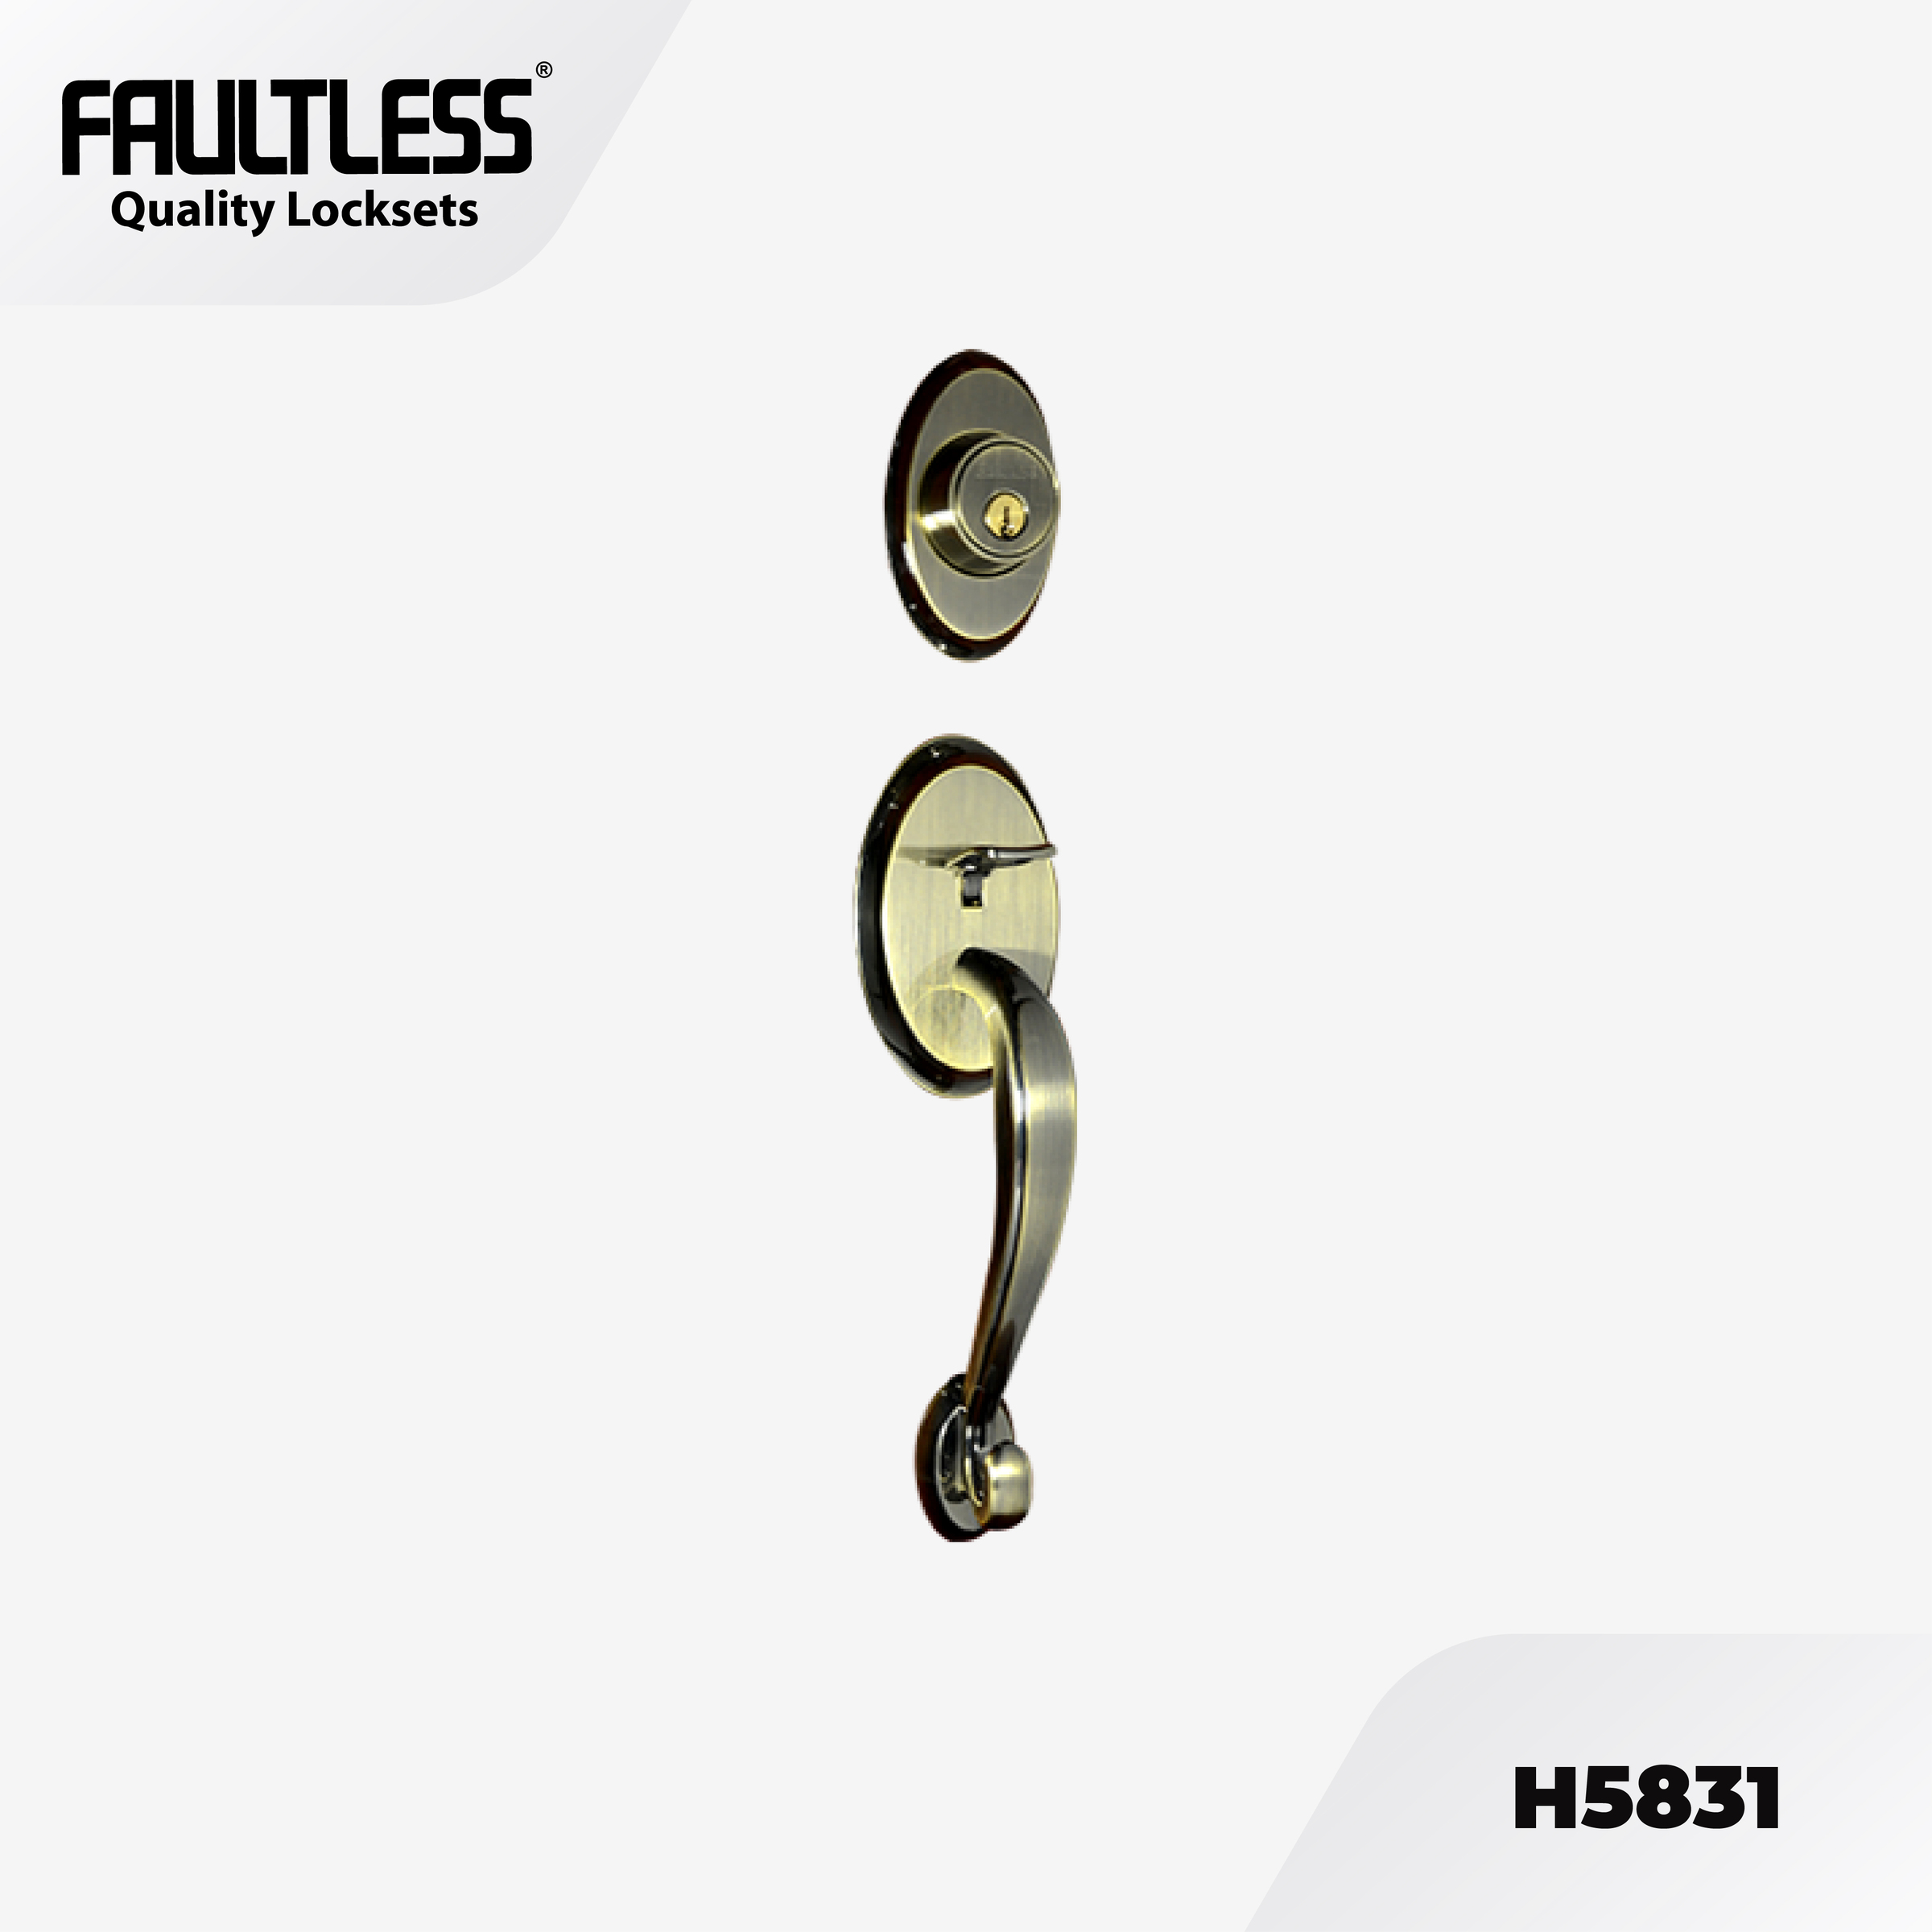 Faultless Handleset H5831